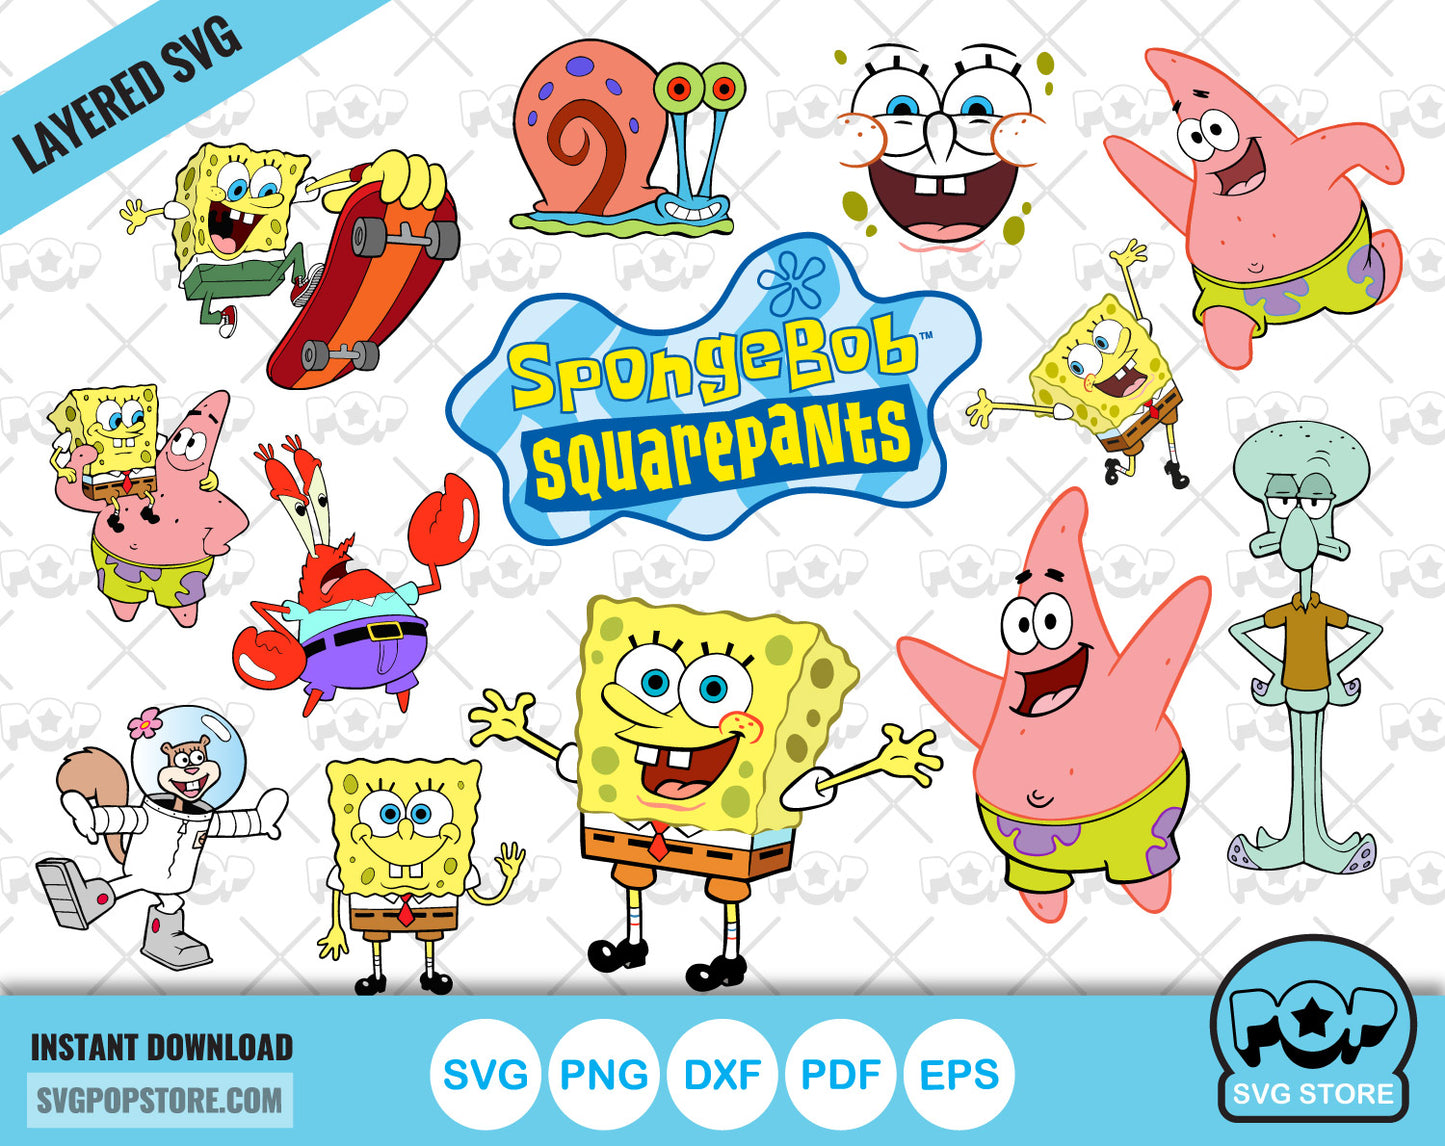 Spongebob Squarepants clipart set, SpongeBob svg cut files for Cricut / Silhouette, Spongebob png